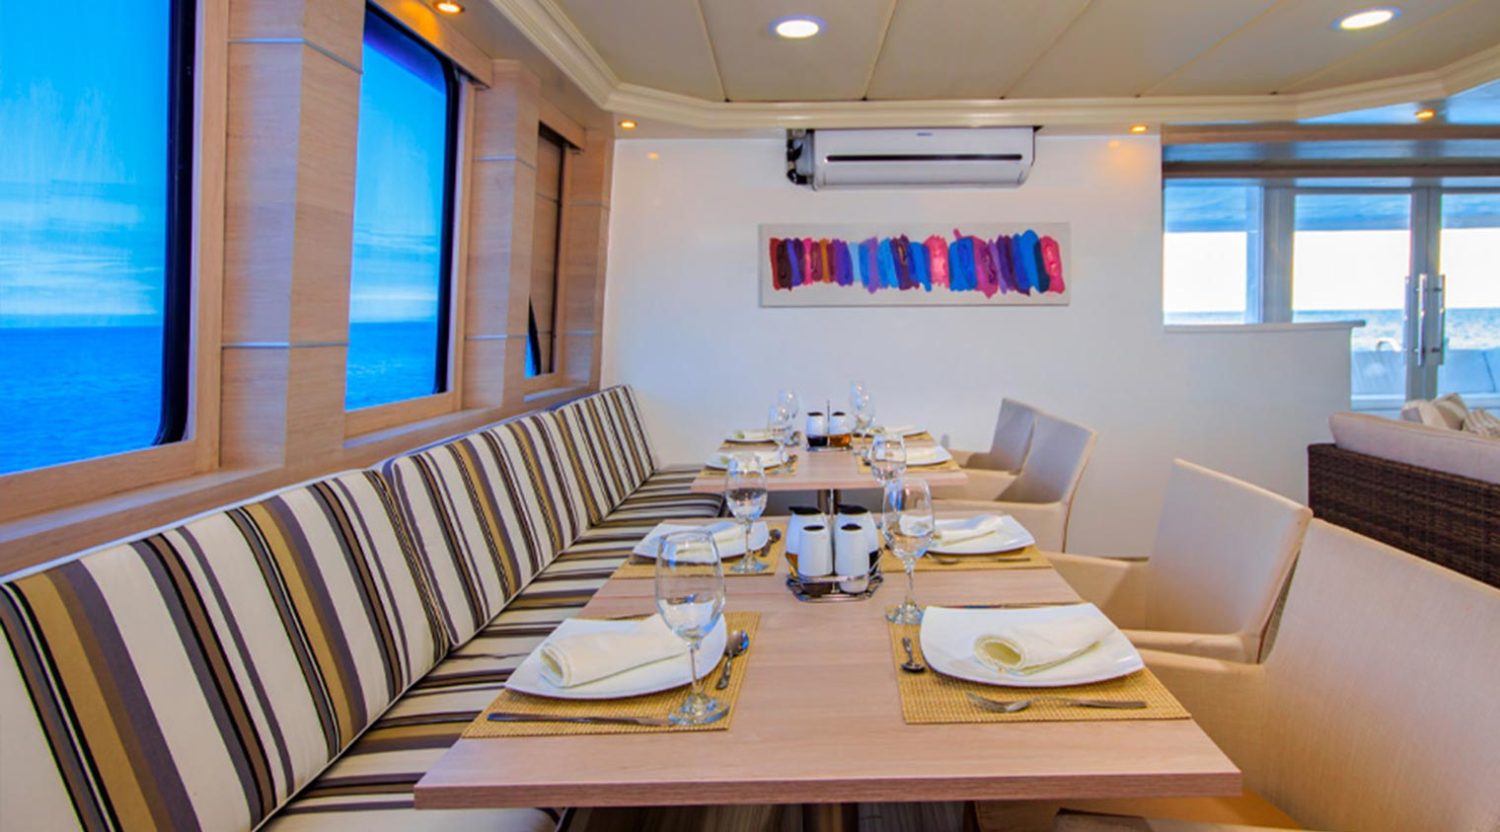 dining room of treasure of galapagos yacht of galapagos islands